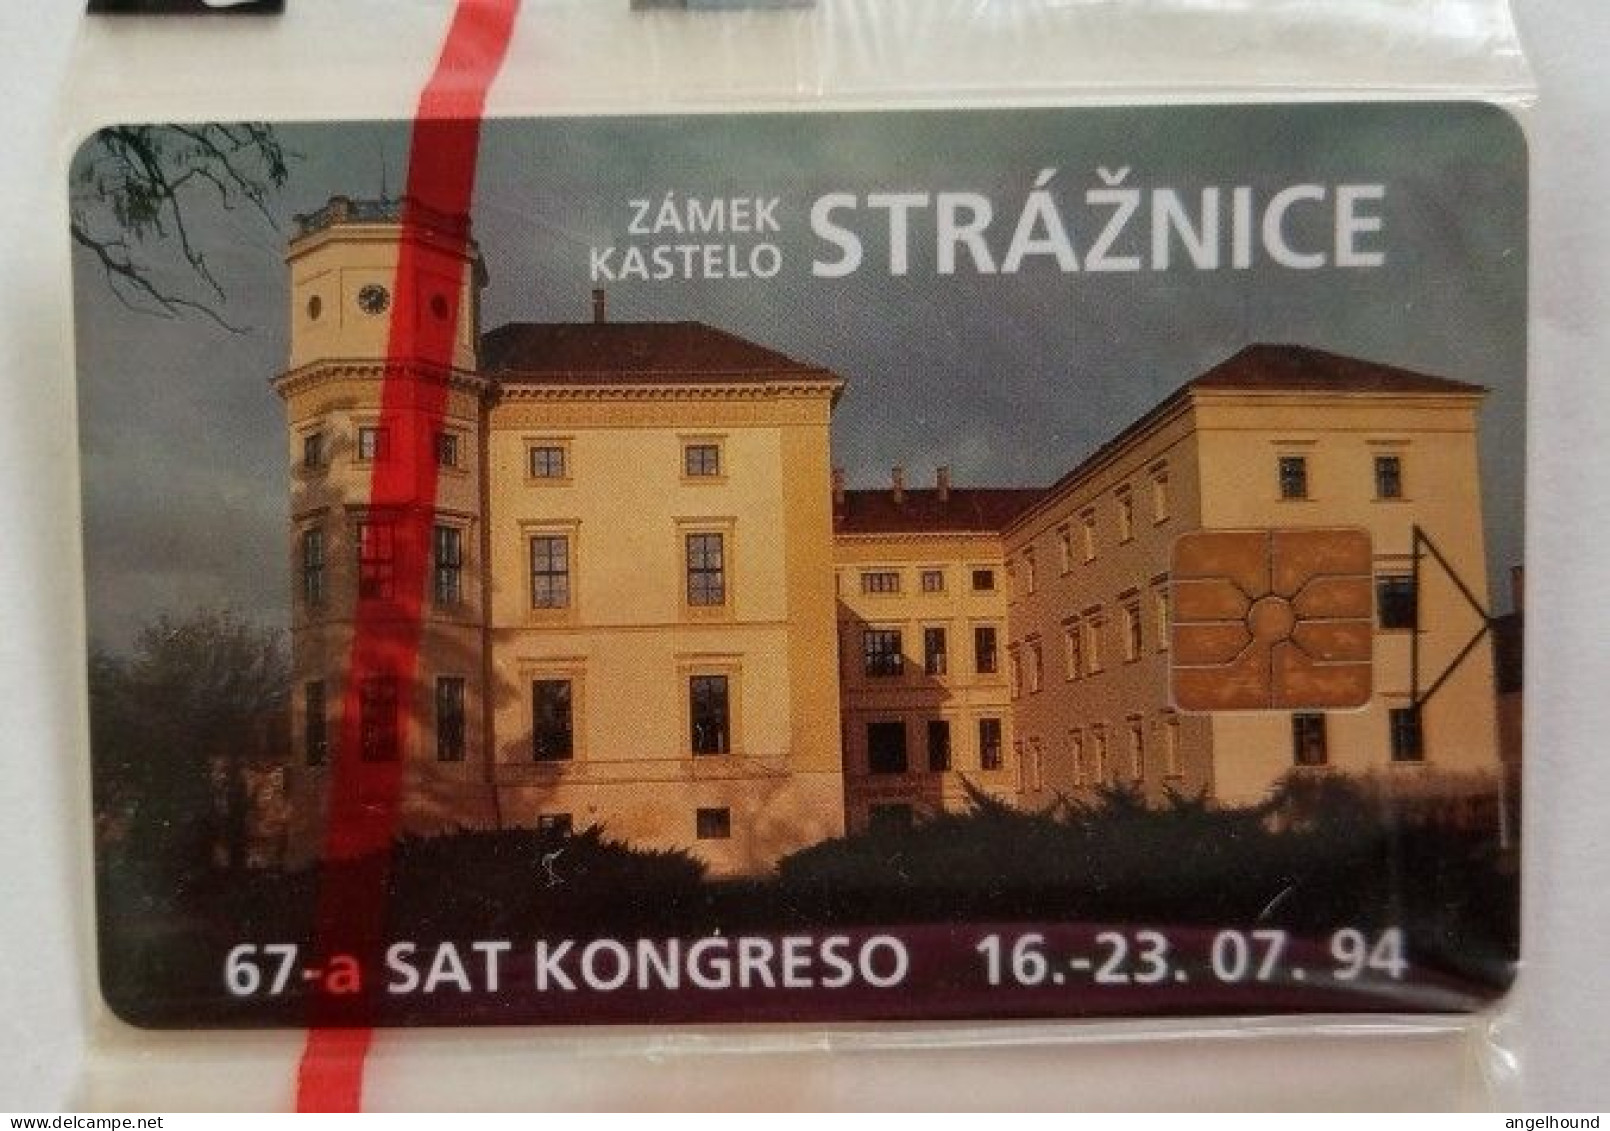 Czech Republic SPT 10 Units Chip Card MINT - Esperanto Congress Straznice - Czech Republic